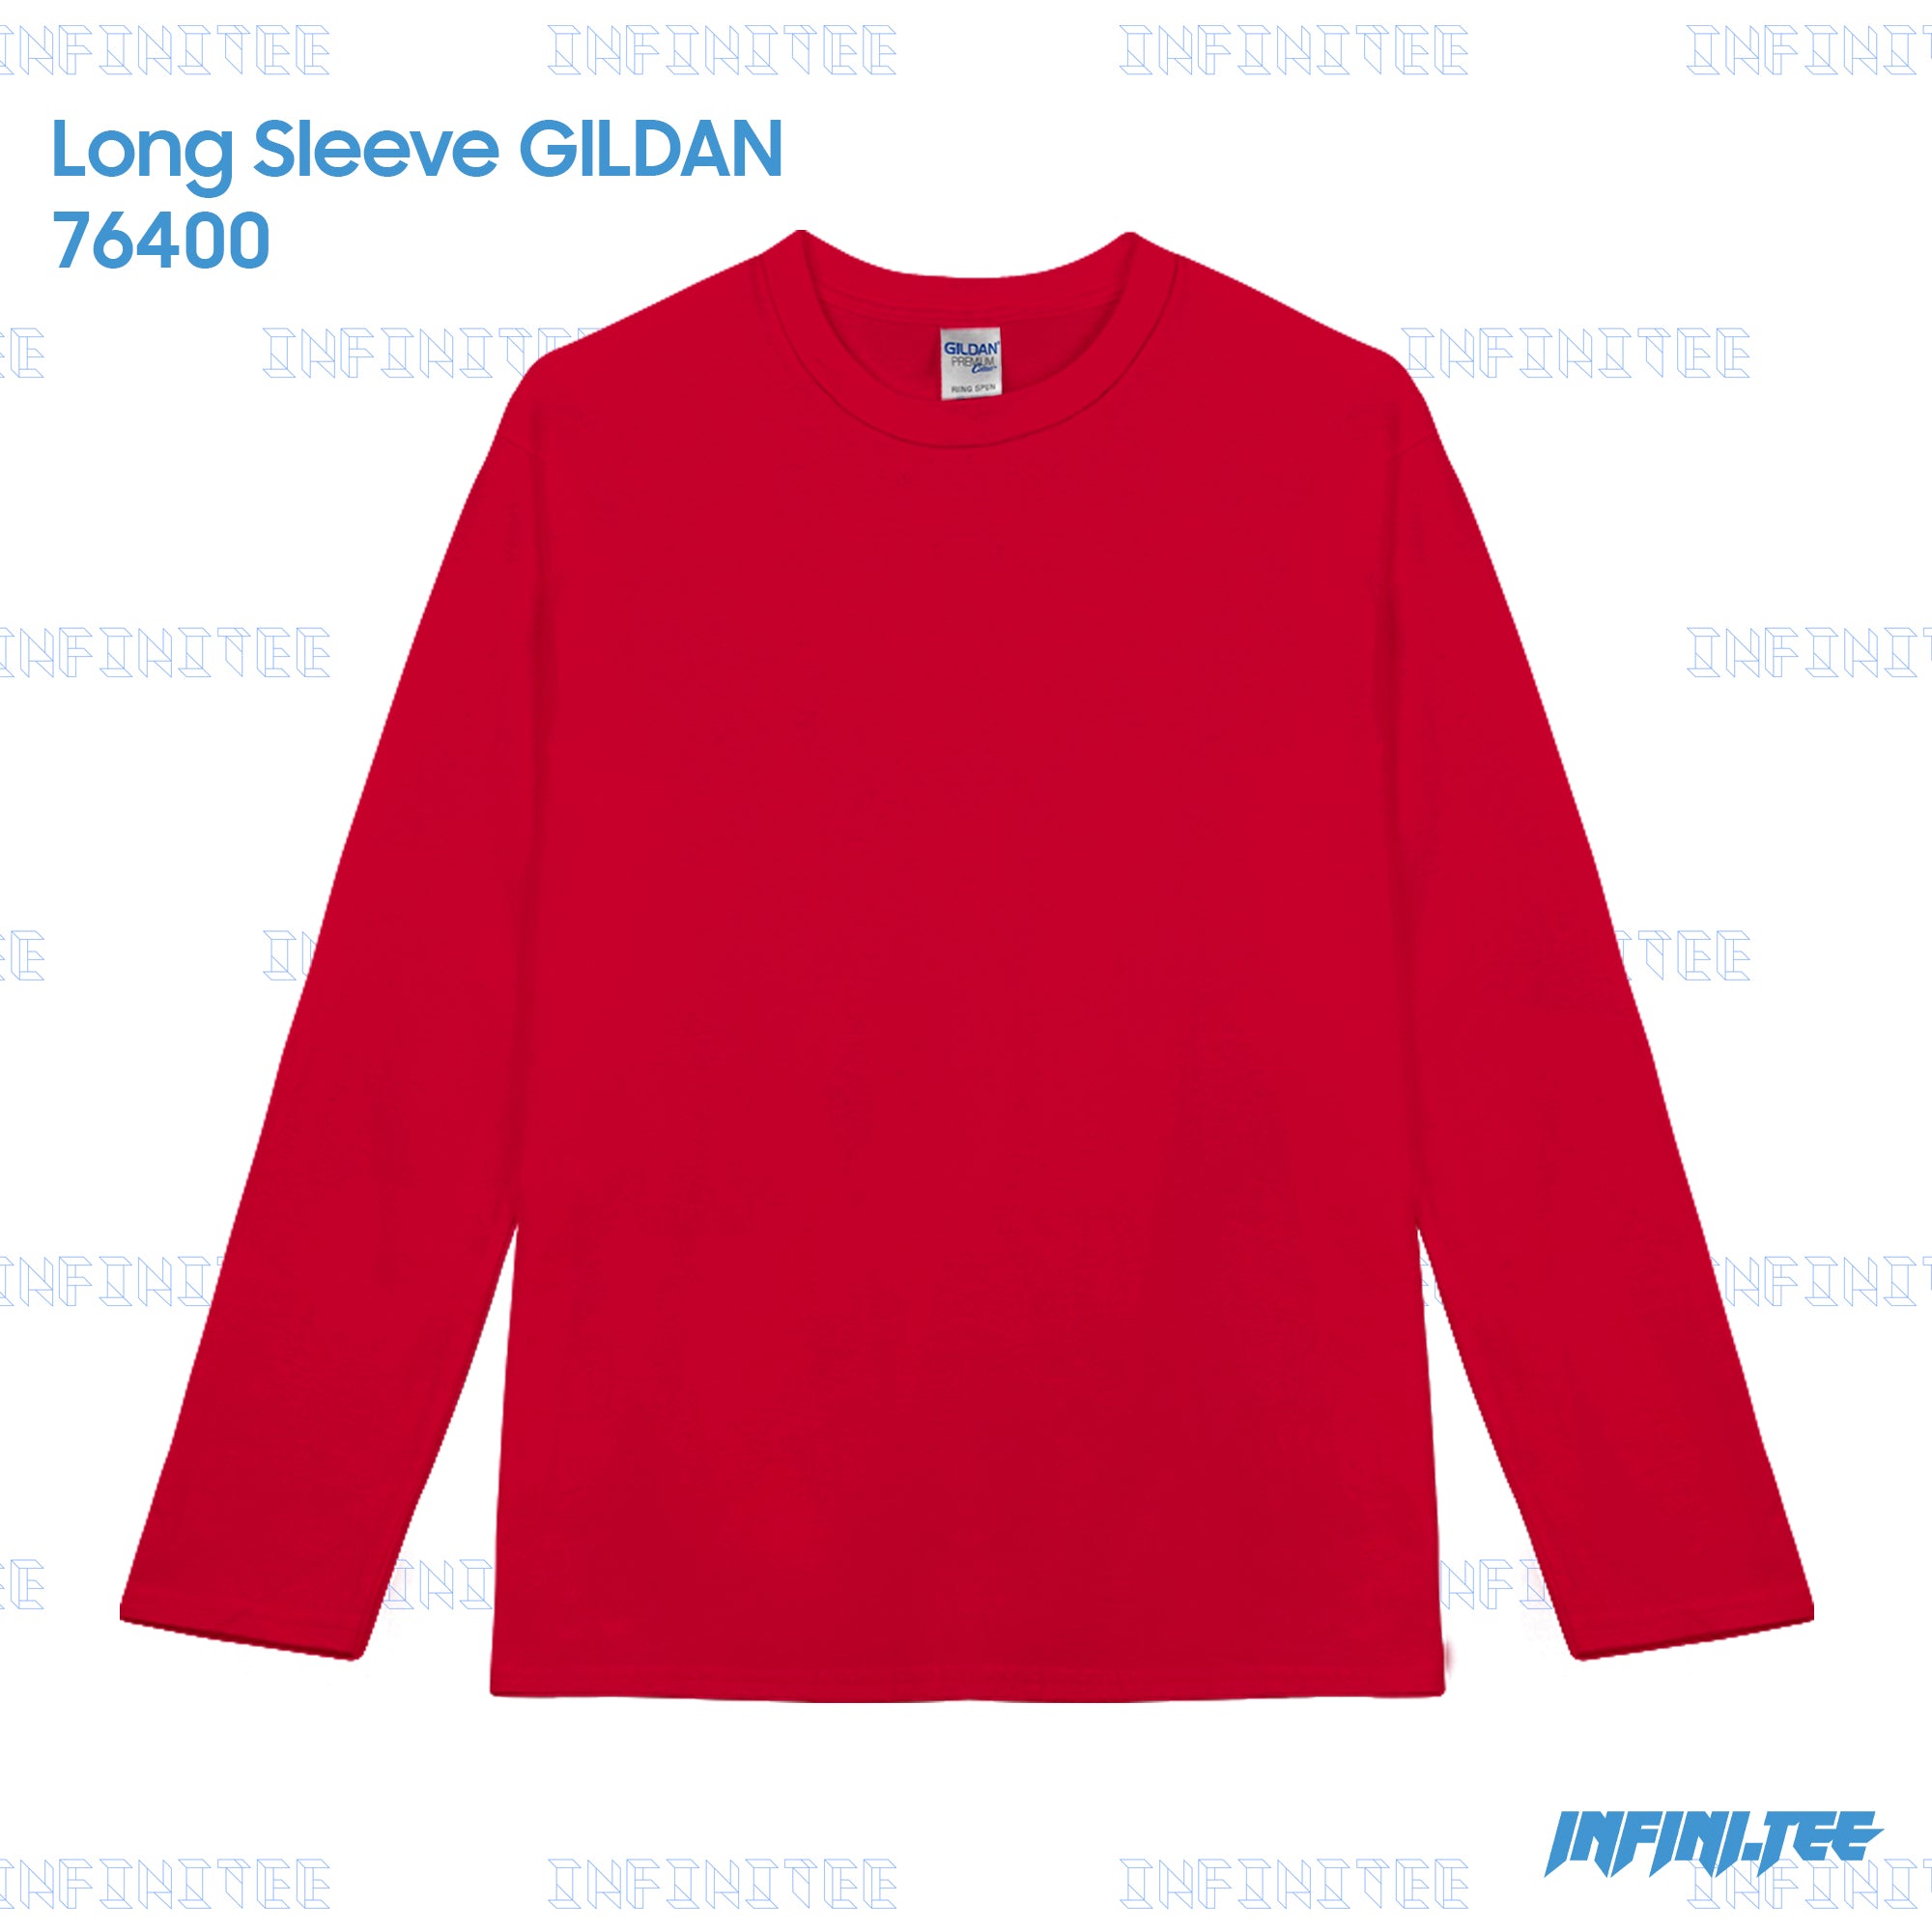 LONG SLEEVE 76400 GILDAN - RED